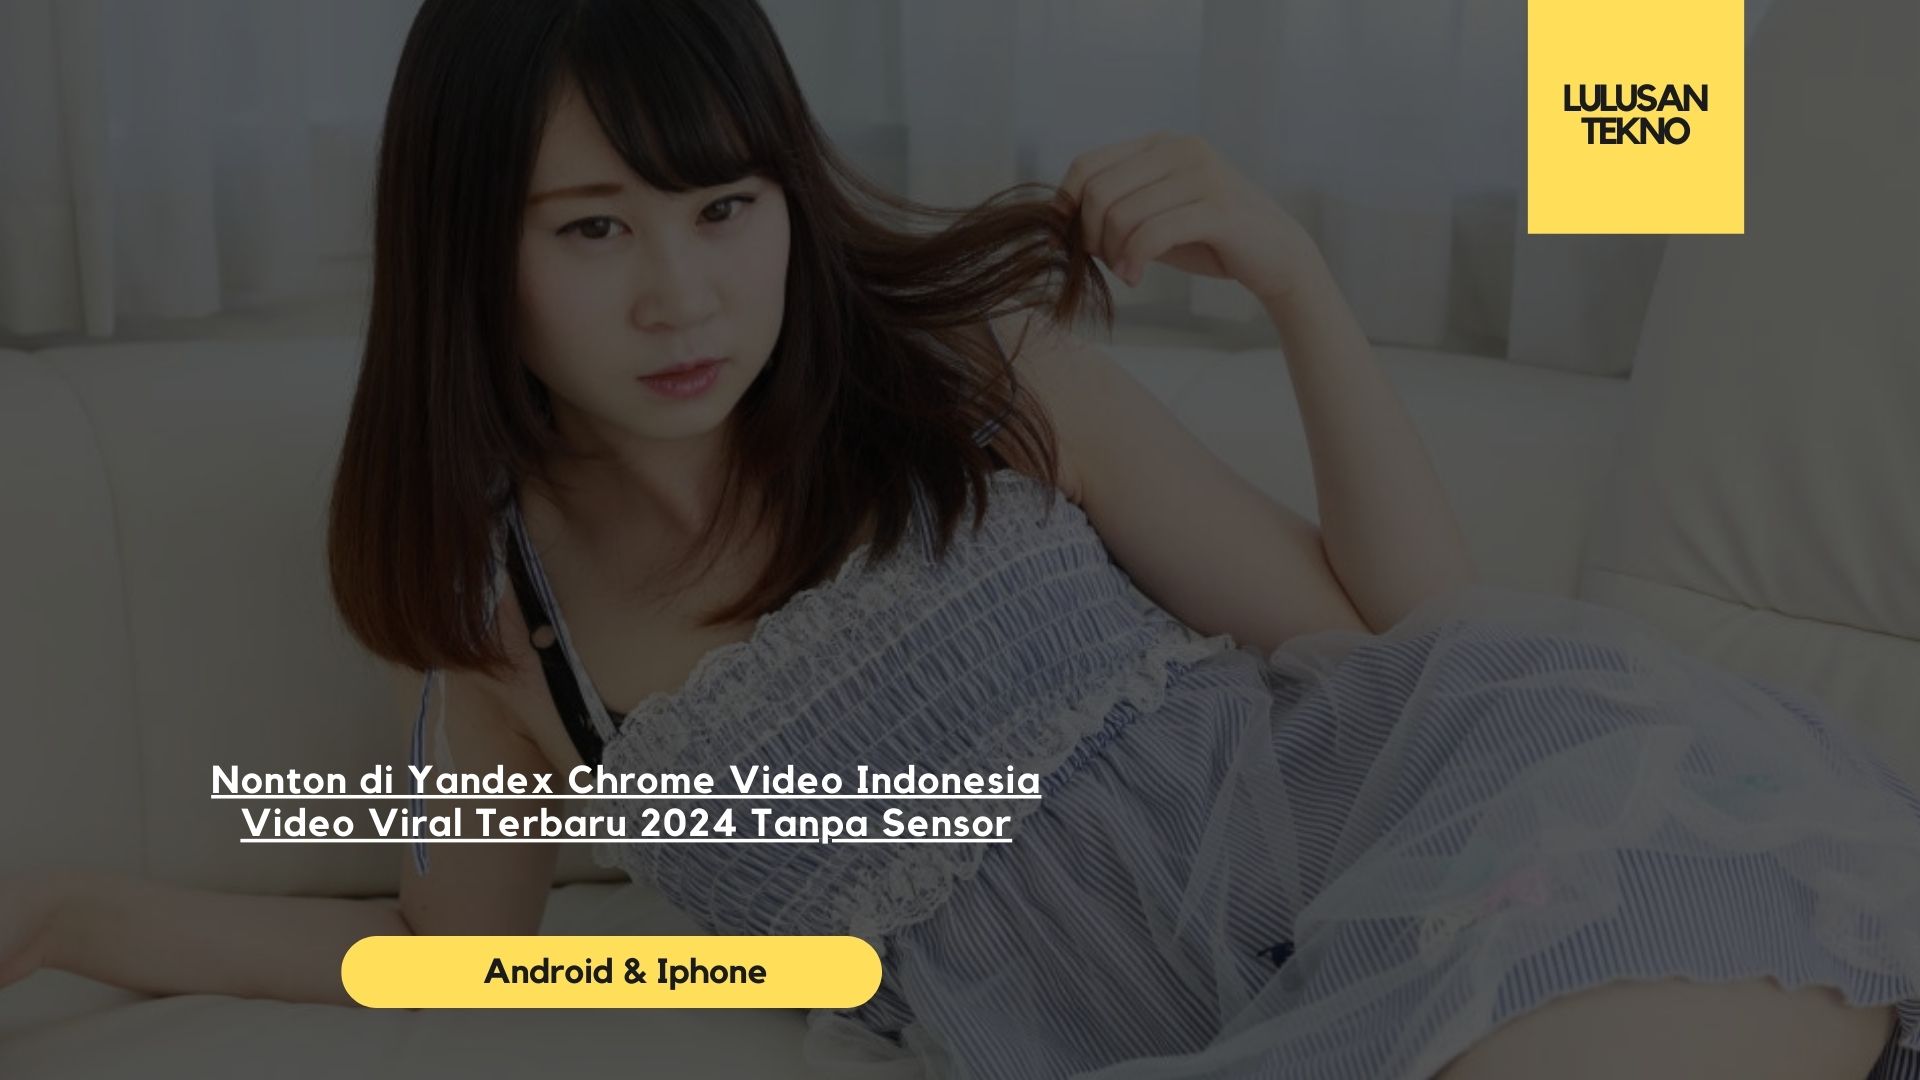 Nonton di Yandex Chrome Video Indonesia Video Viral Terbaru 2024 Tanpa Sensor